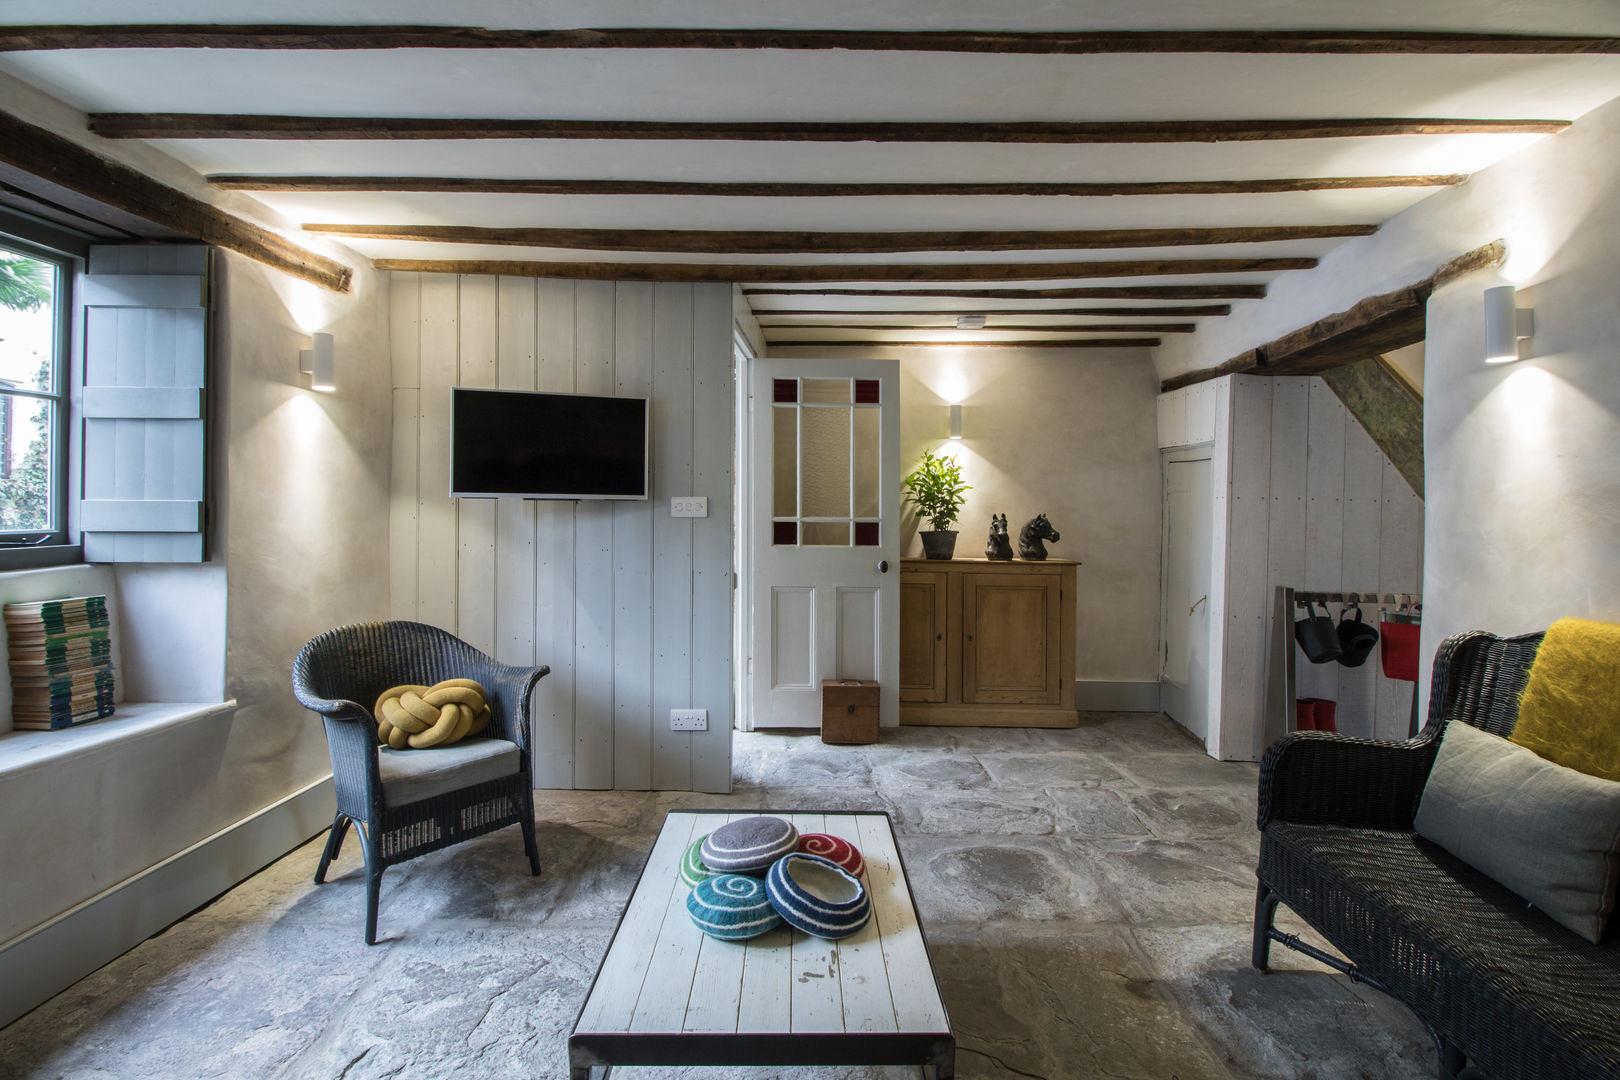 Miner's Cottage II: Living Room design storey Soggiorno in stile rustico shabby chic,living room,living room